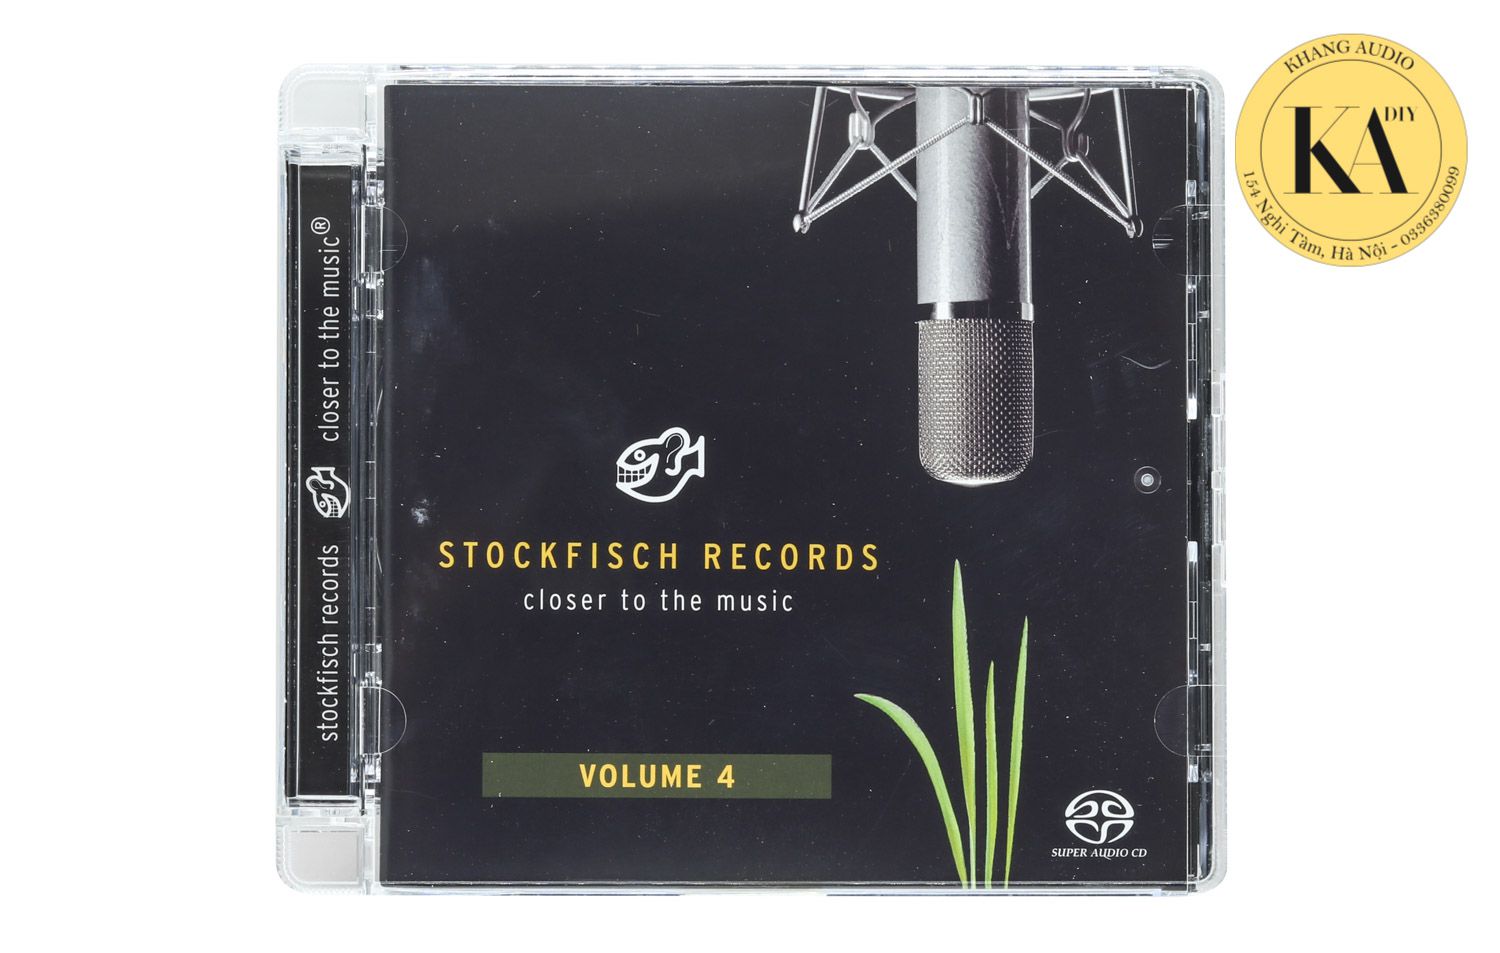 Stockfisch Records Vol.4 Khang Audio 0336380099